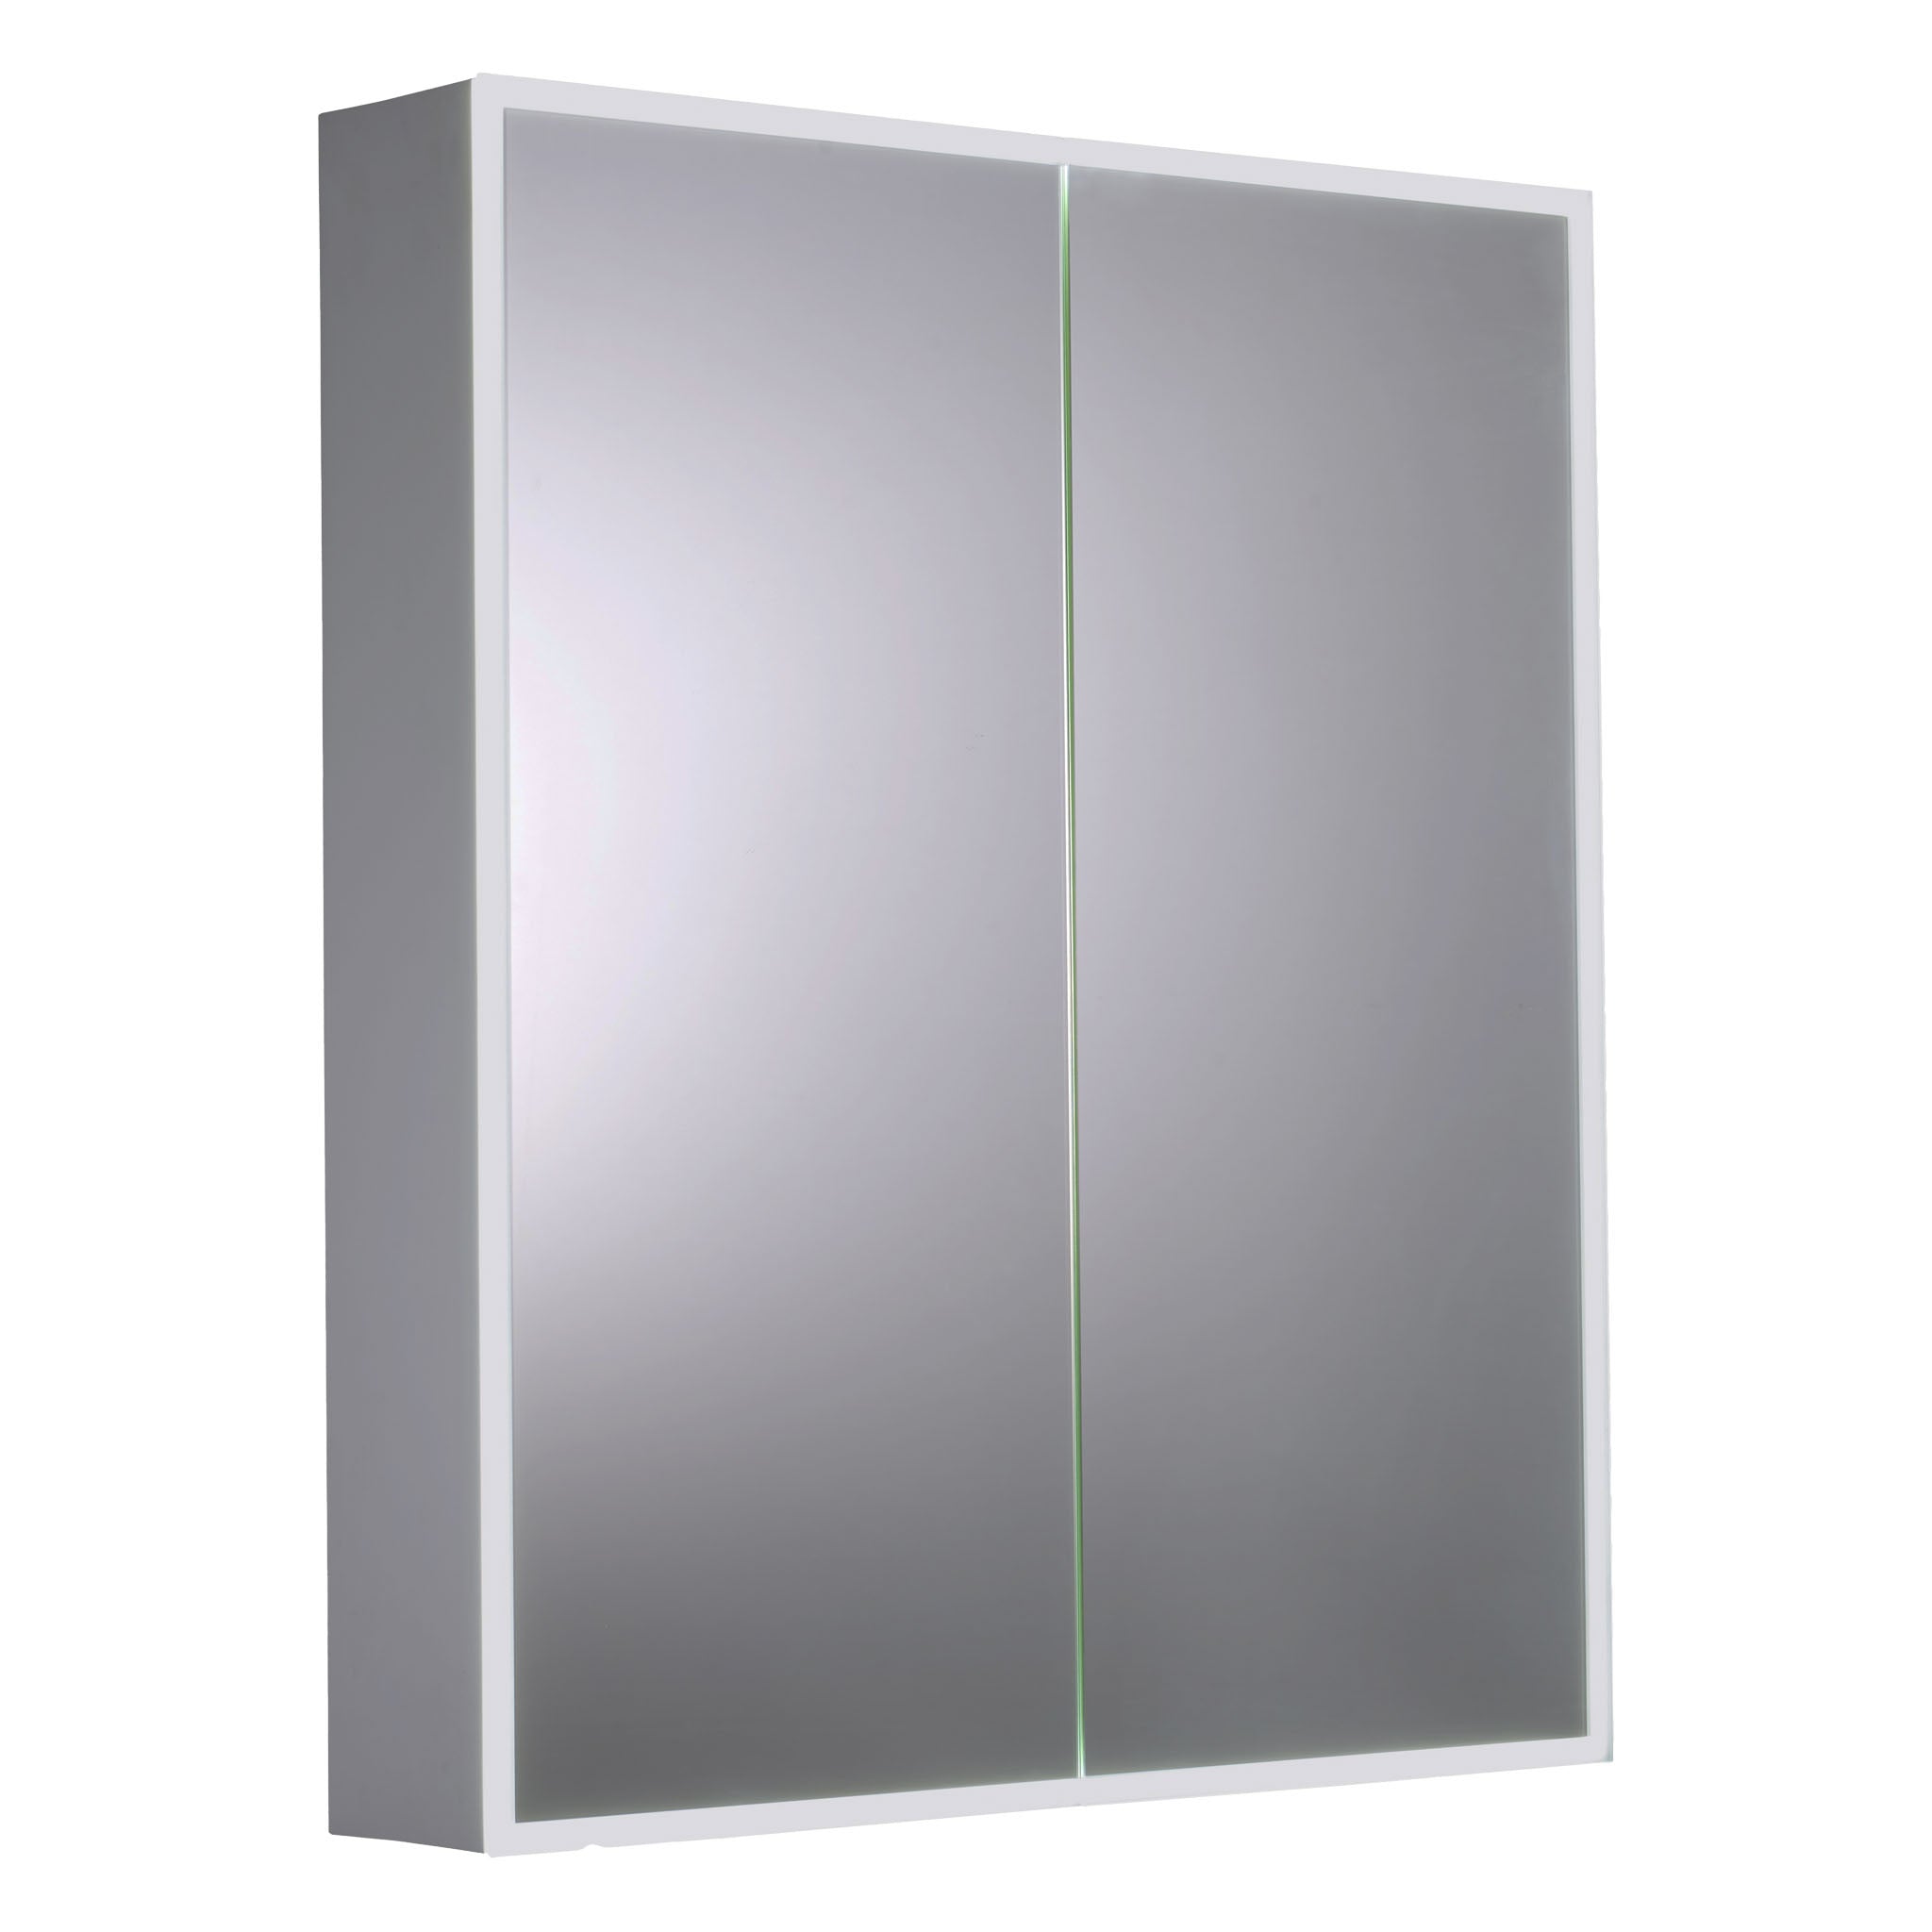 JTP Aspect 600 LED Double Mirror Cabinet 600 x 700mm